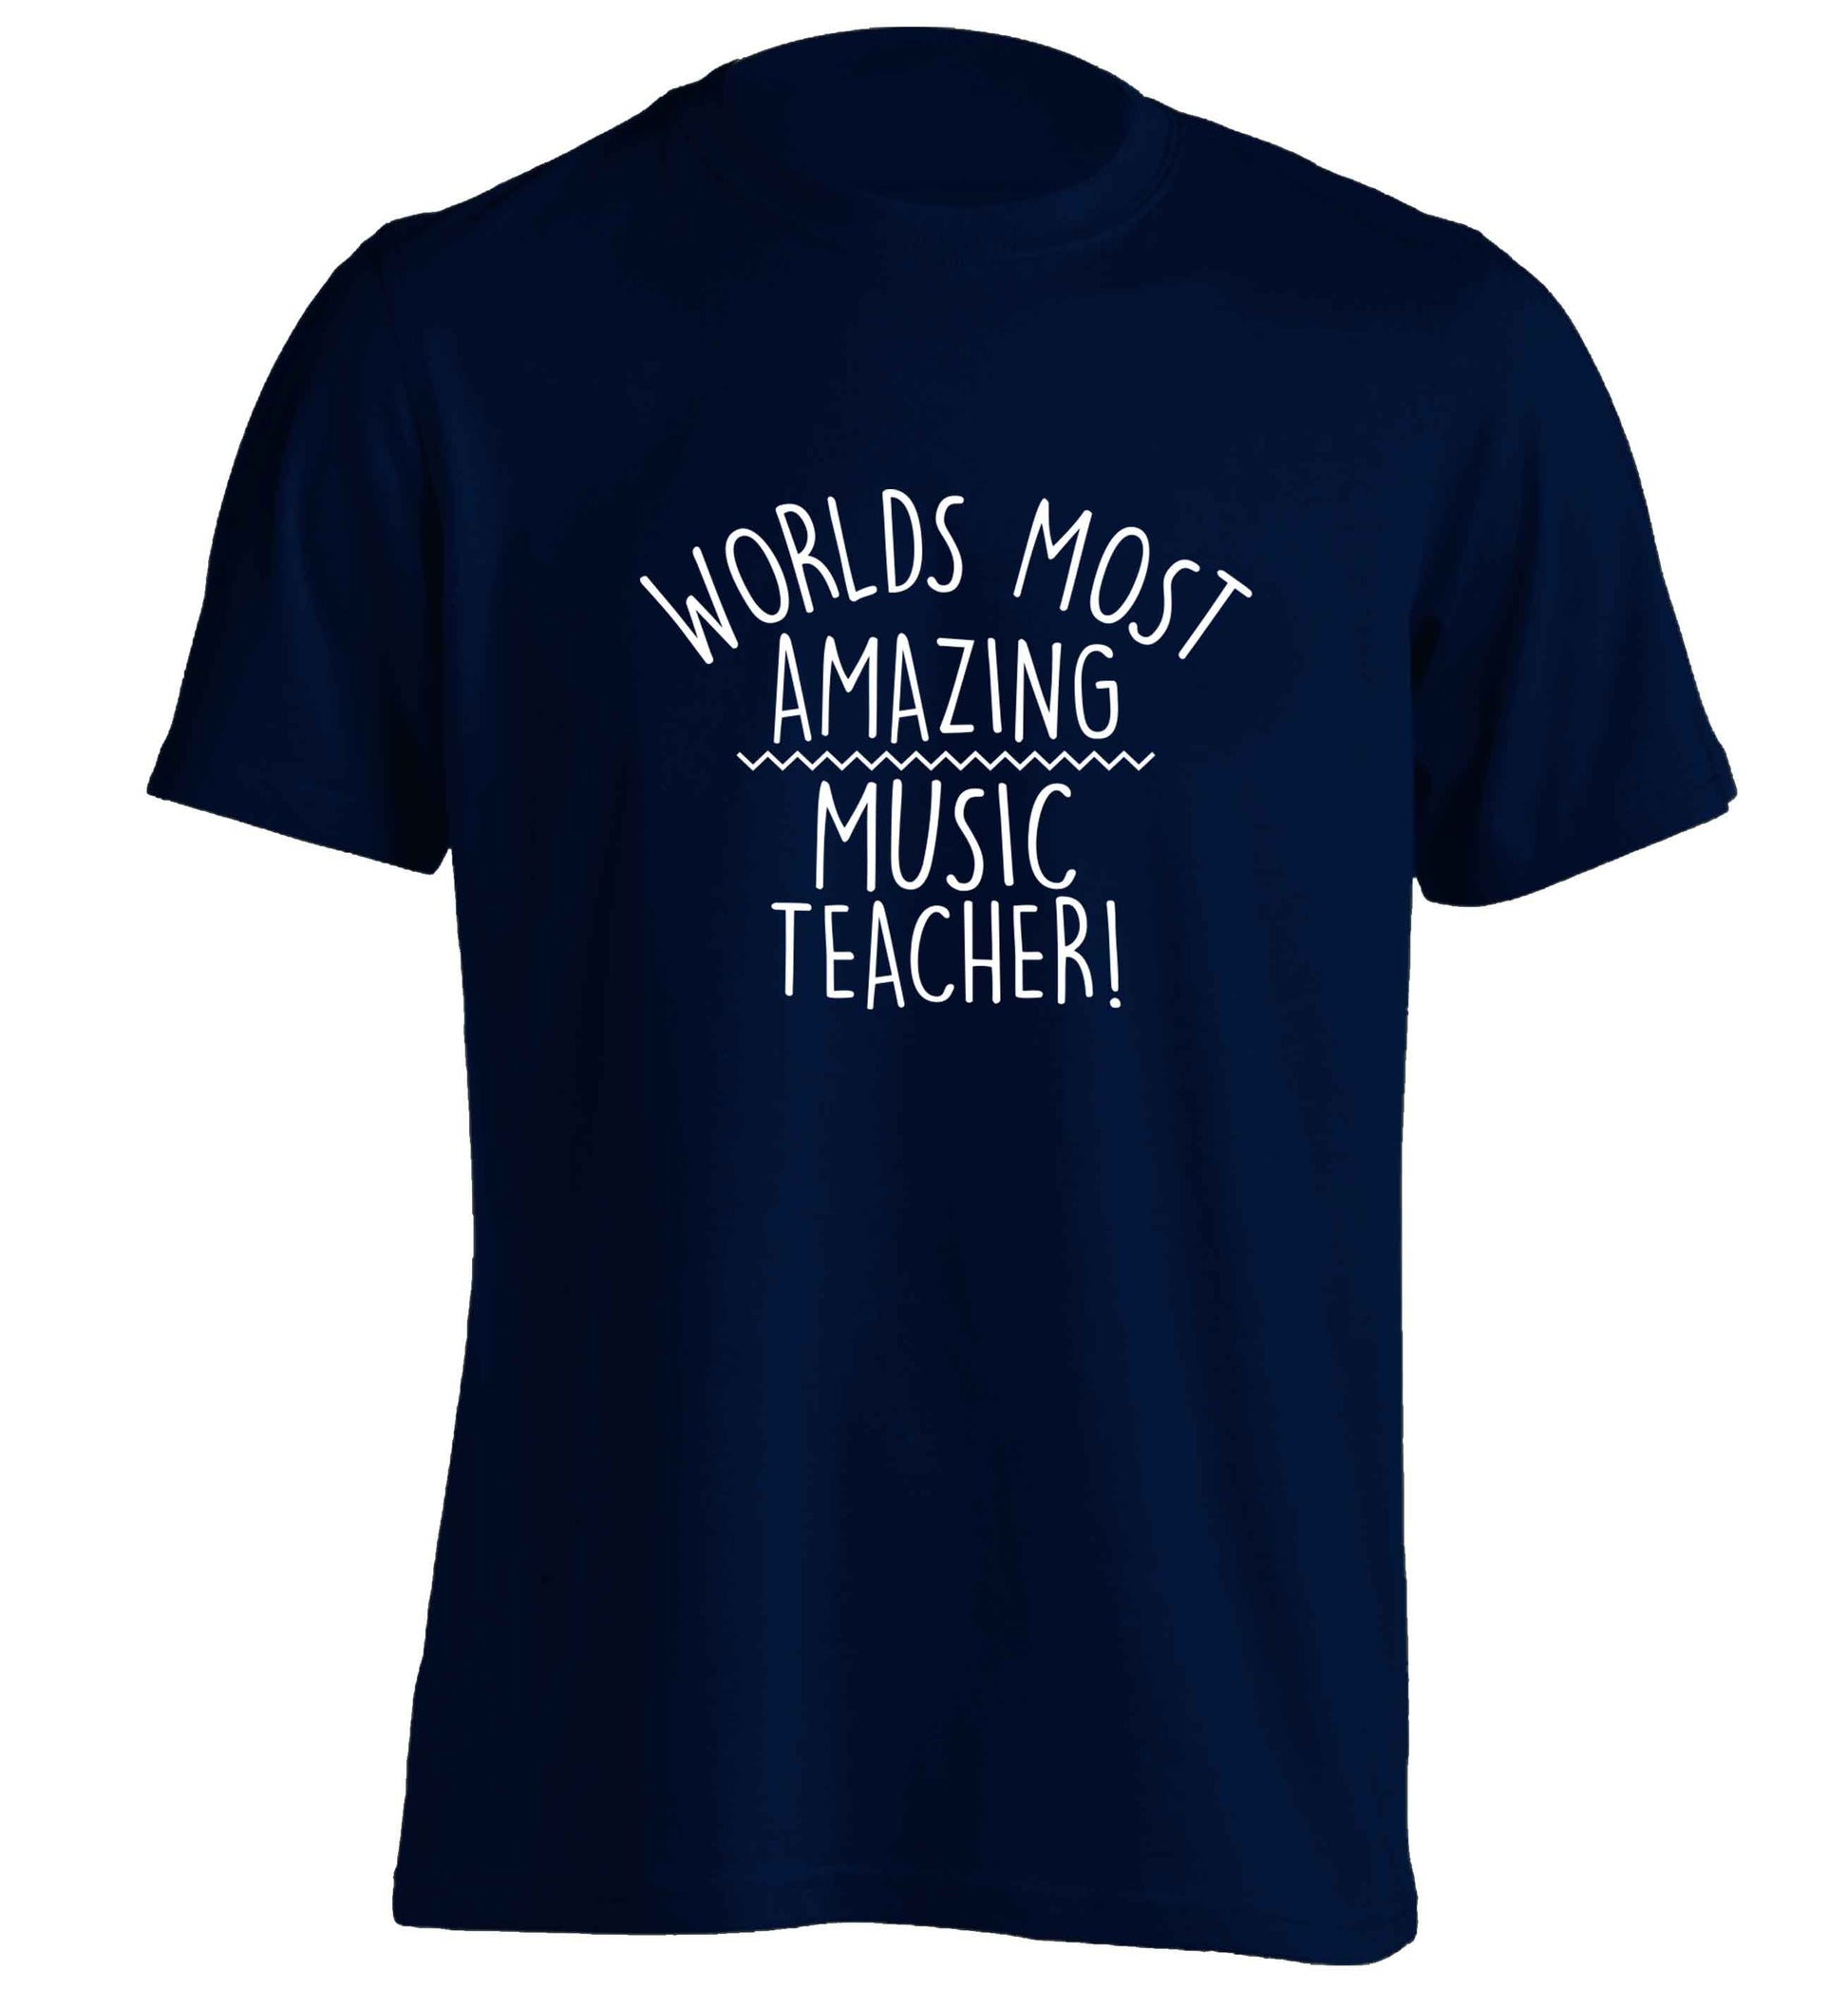 Worlds most amazing music teacher adults unisex navy Tshirt 2XL